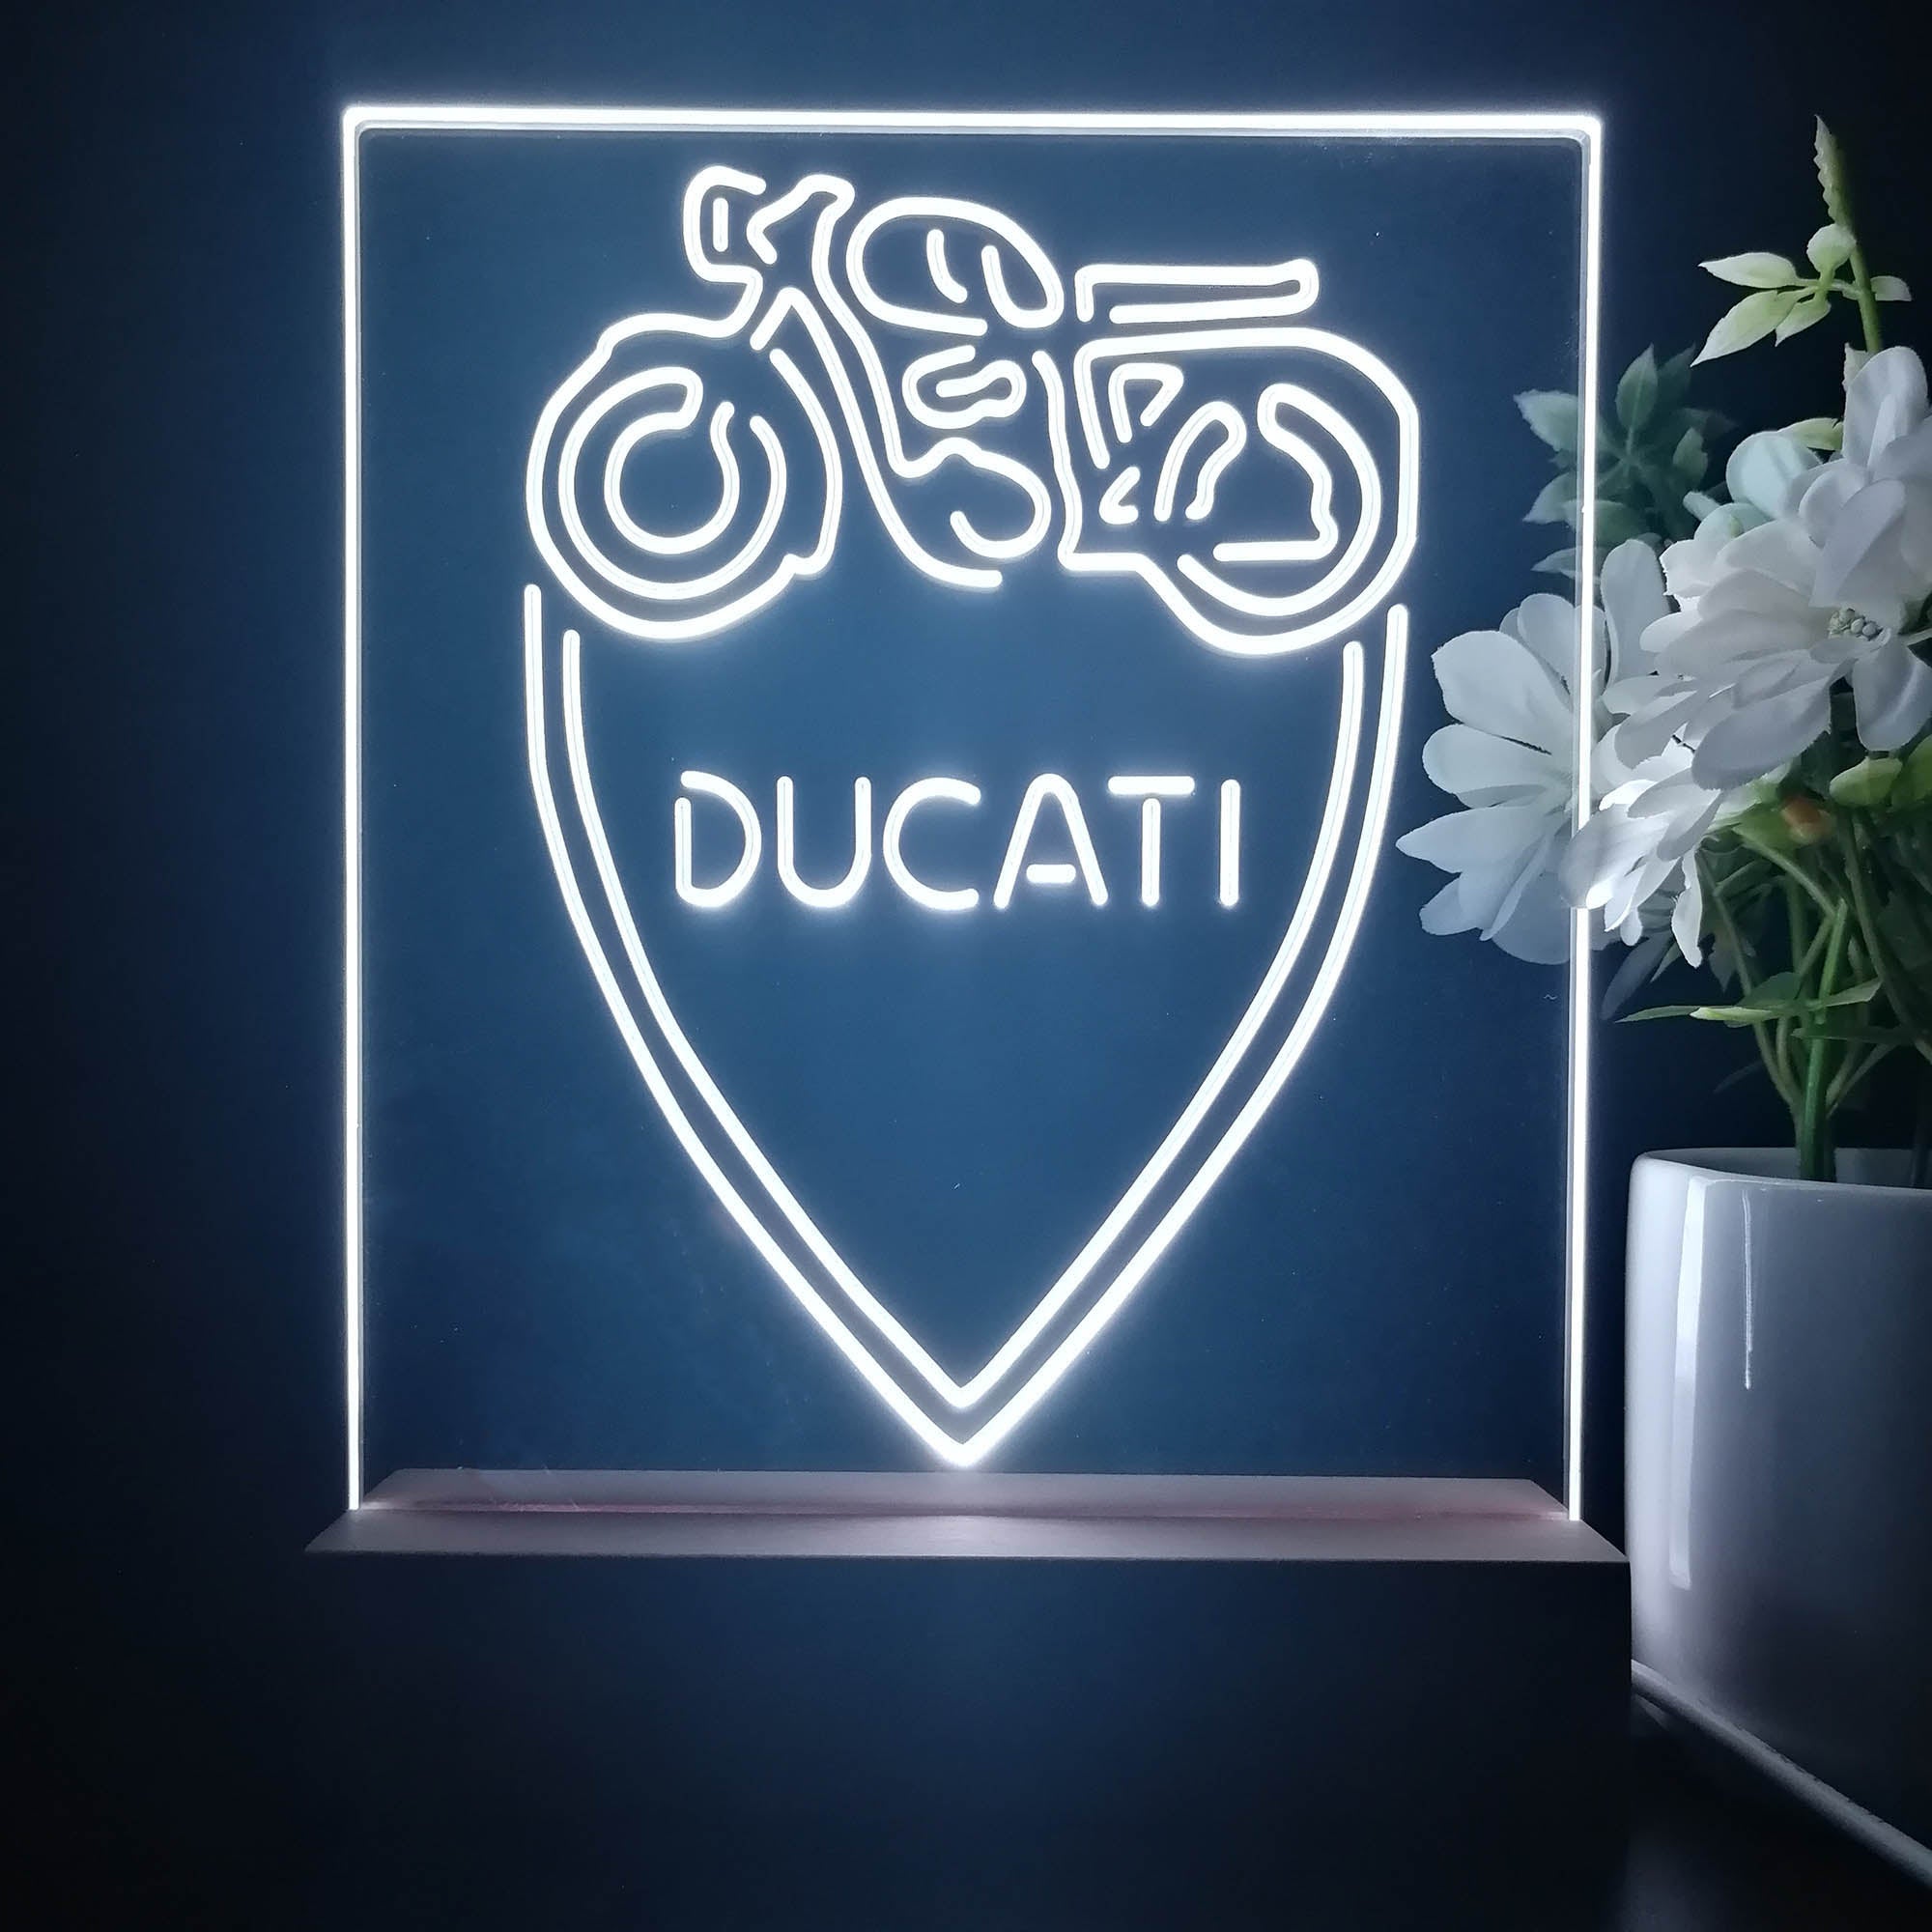 Ducati Motorcycle Club 3D Illusion Night Light Desk Lamp